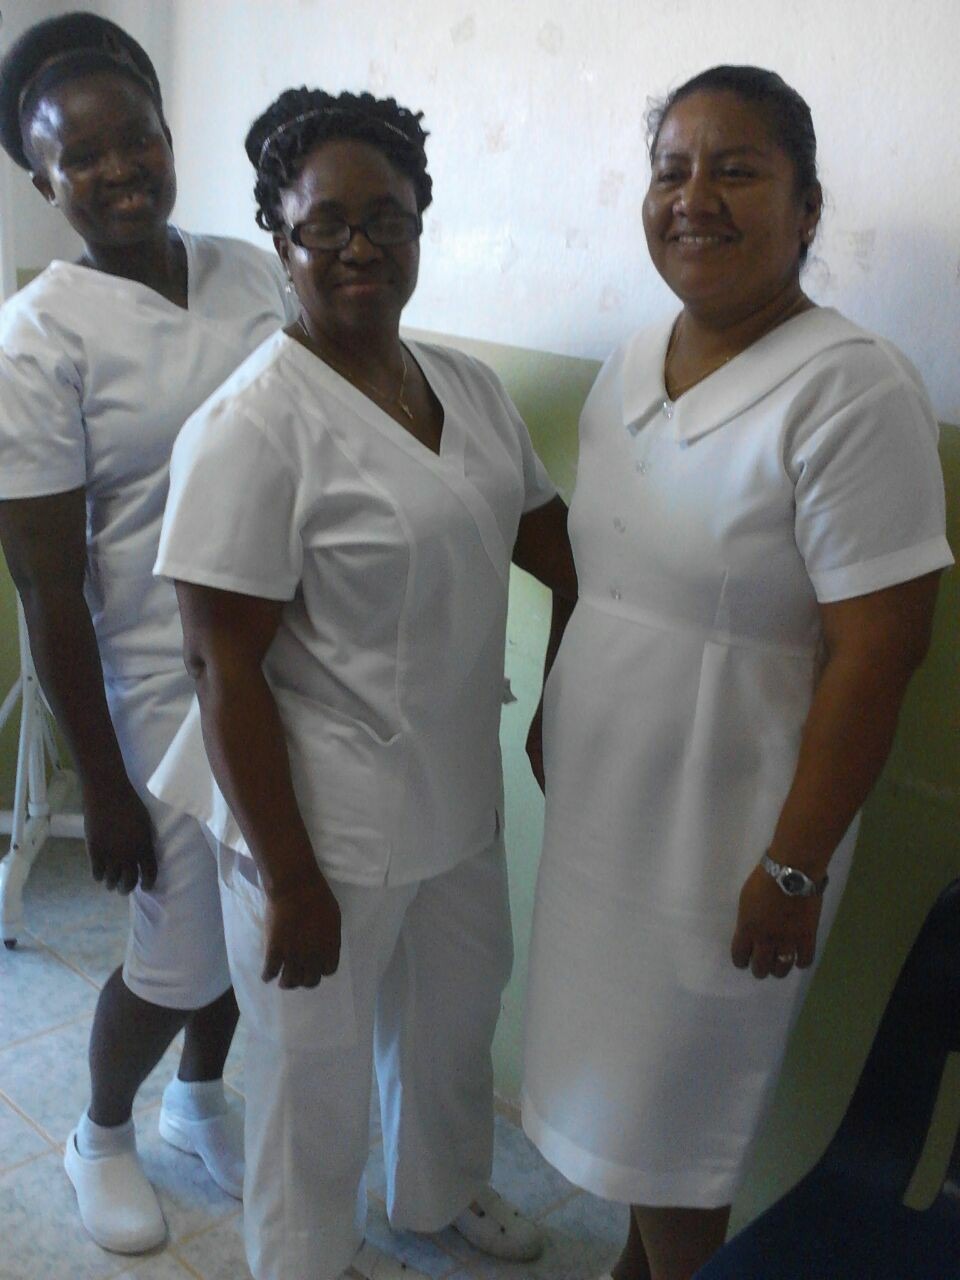 Nurse Image 1